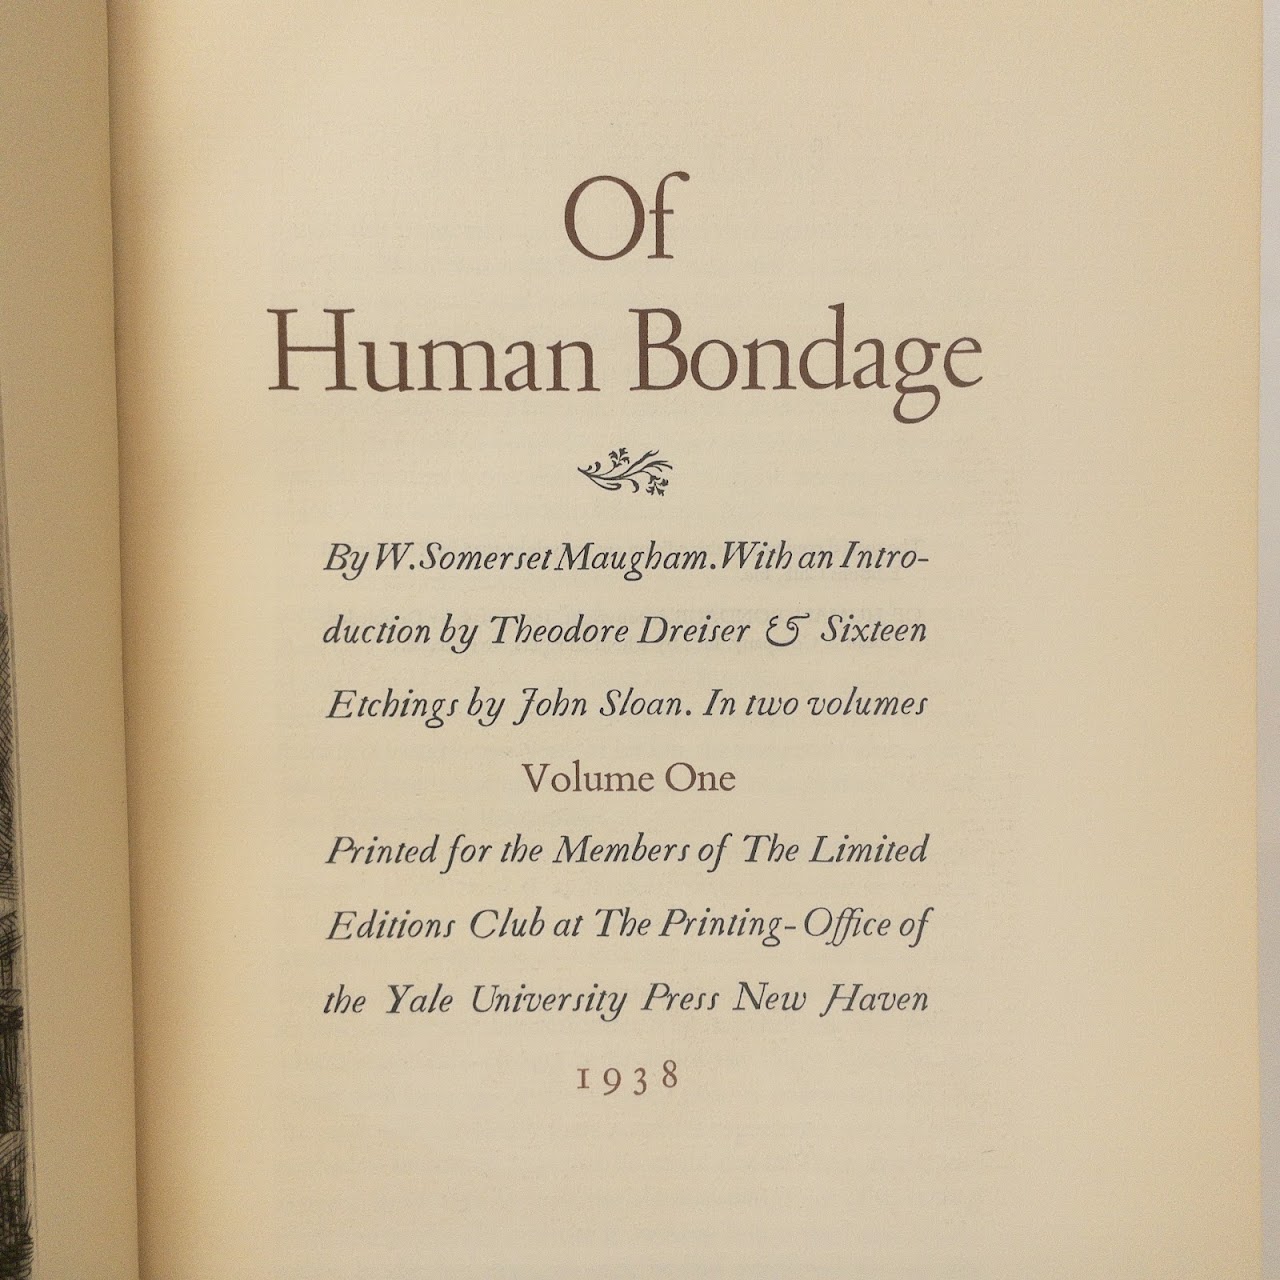 'Of Human Bondage' Two Volume Set